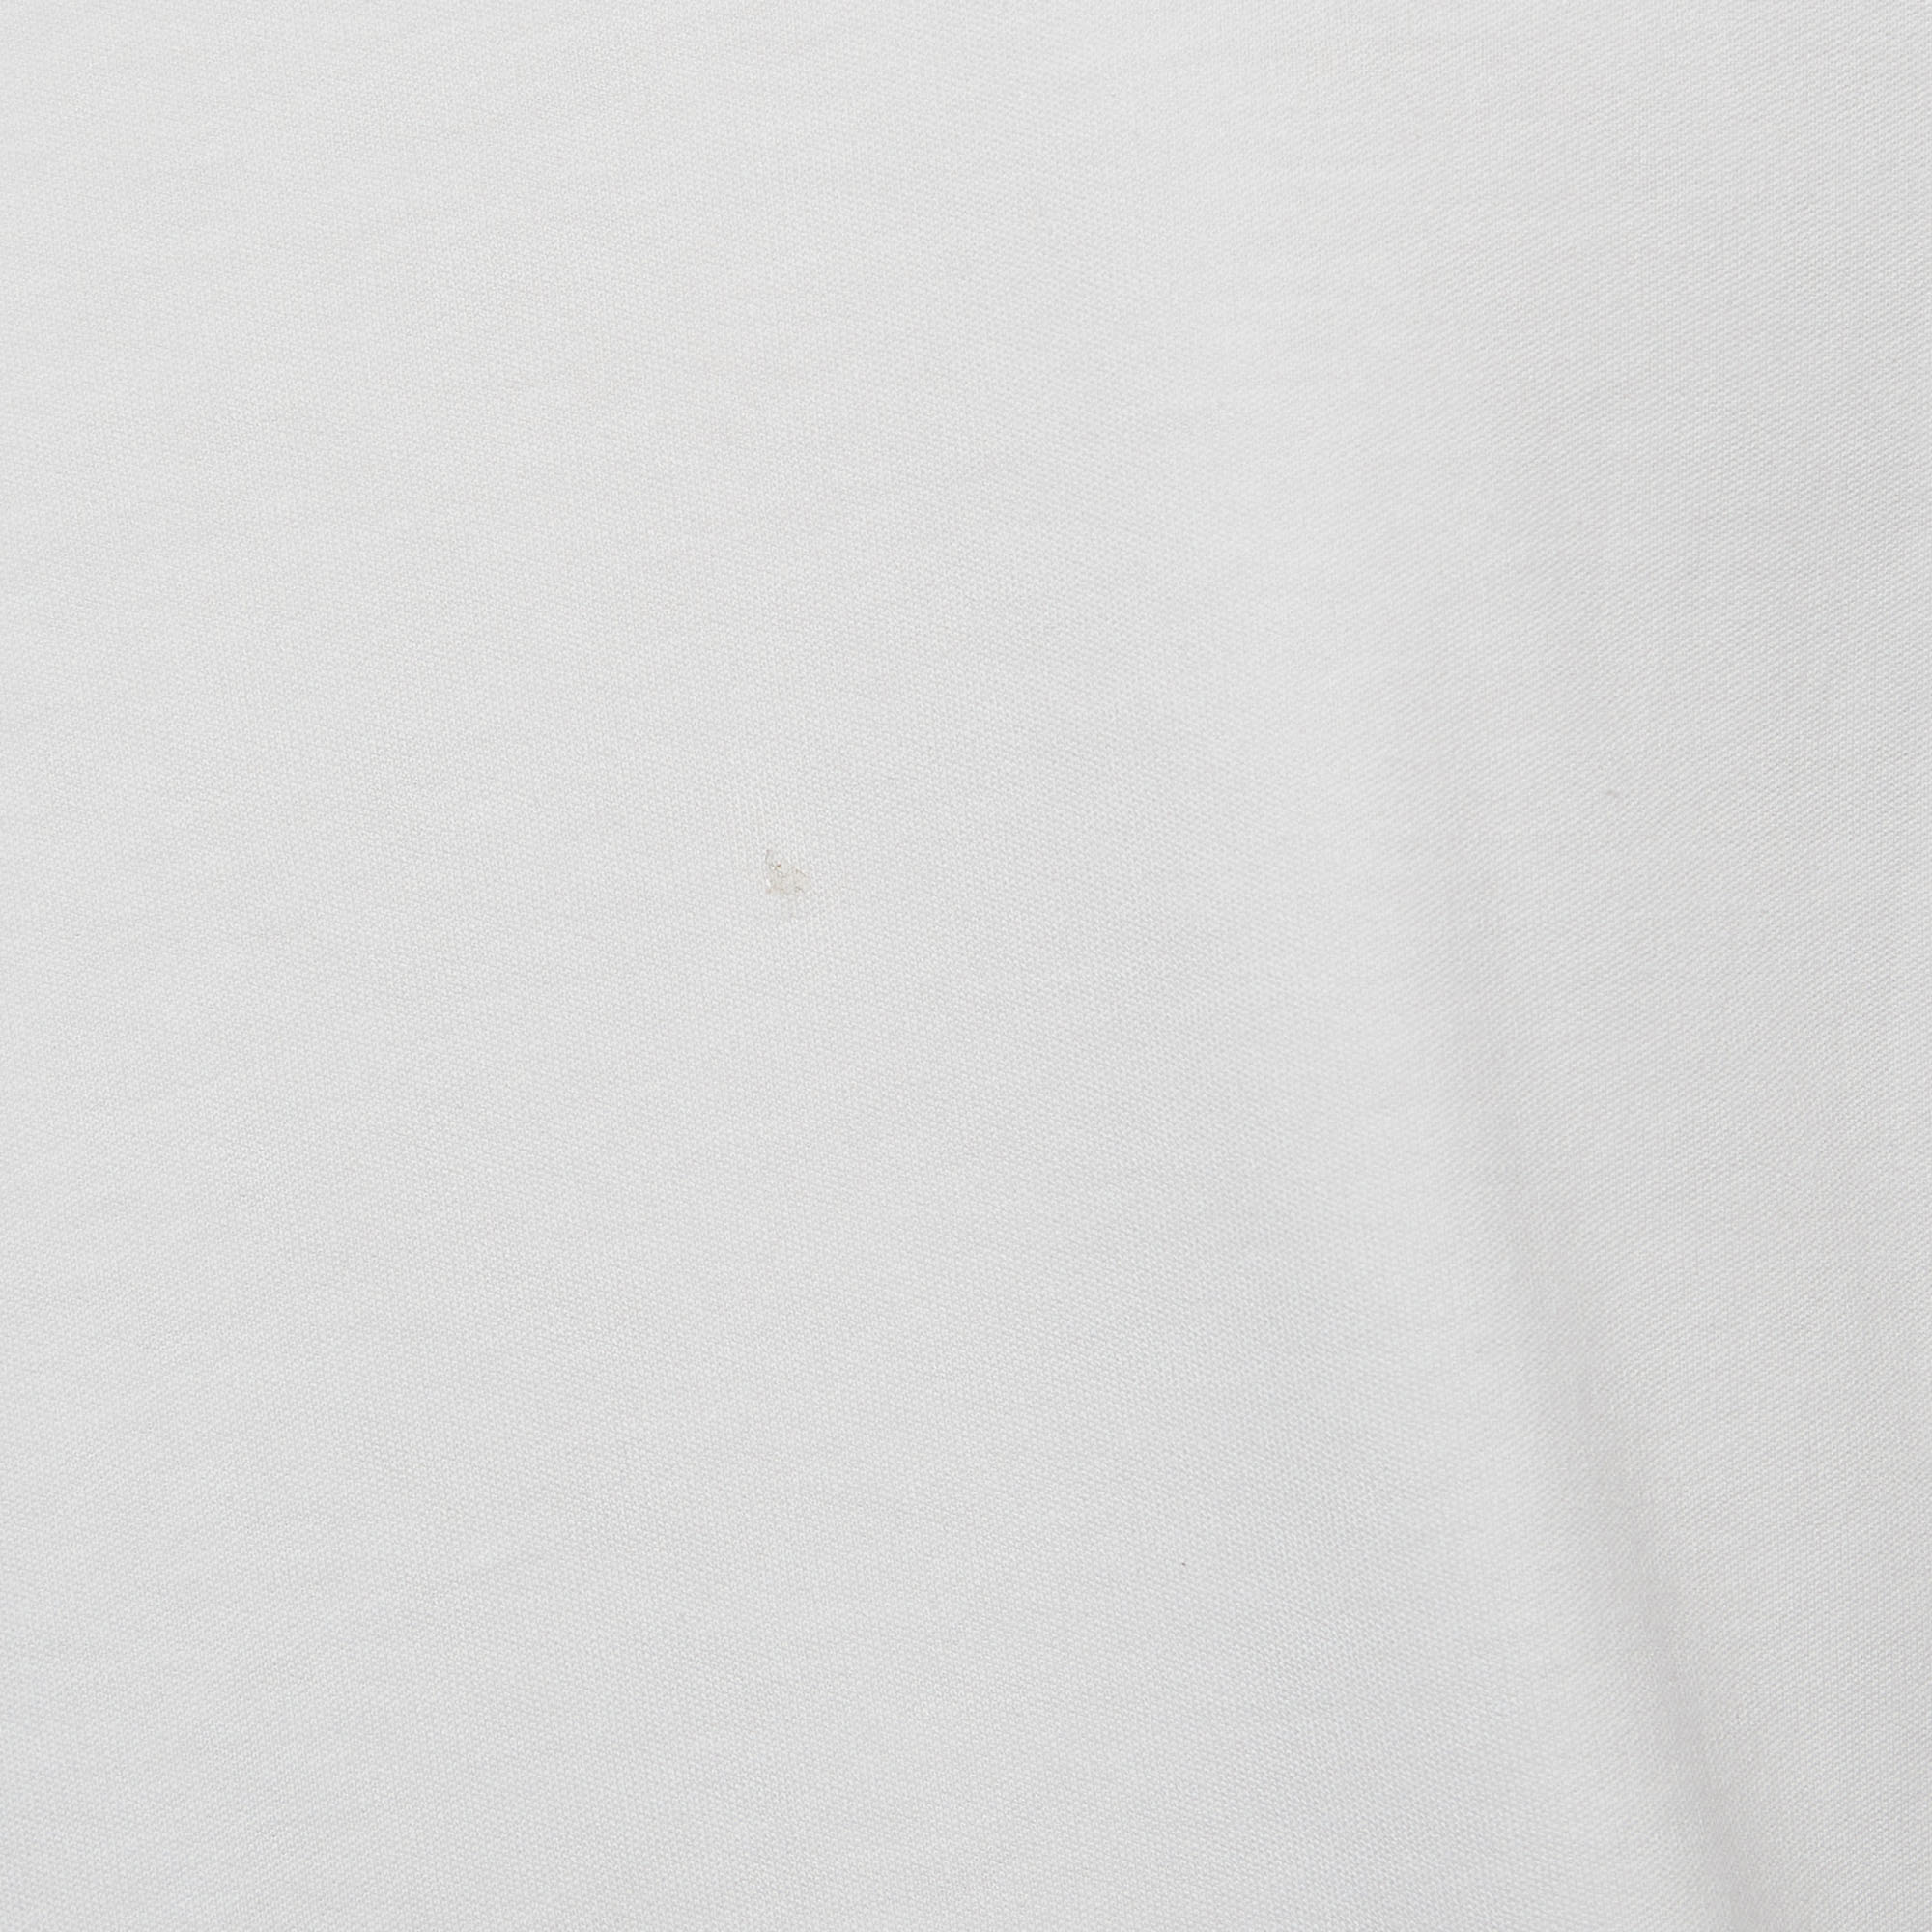 Louis Vuitton White Chain Print Cotton Crew Neck T-Shirt L